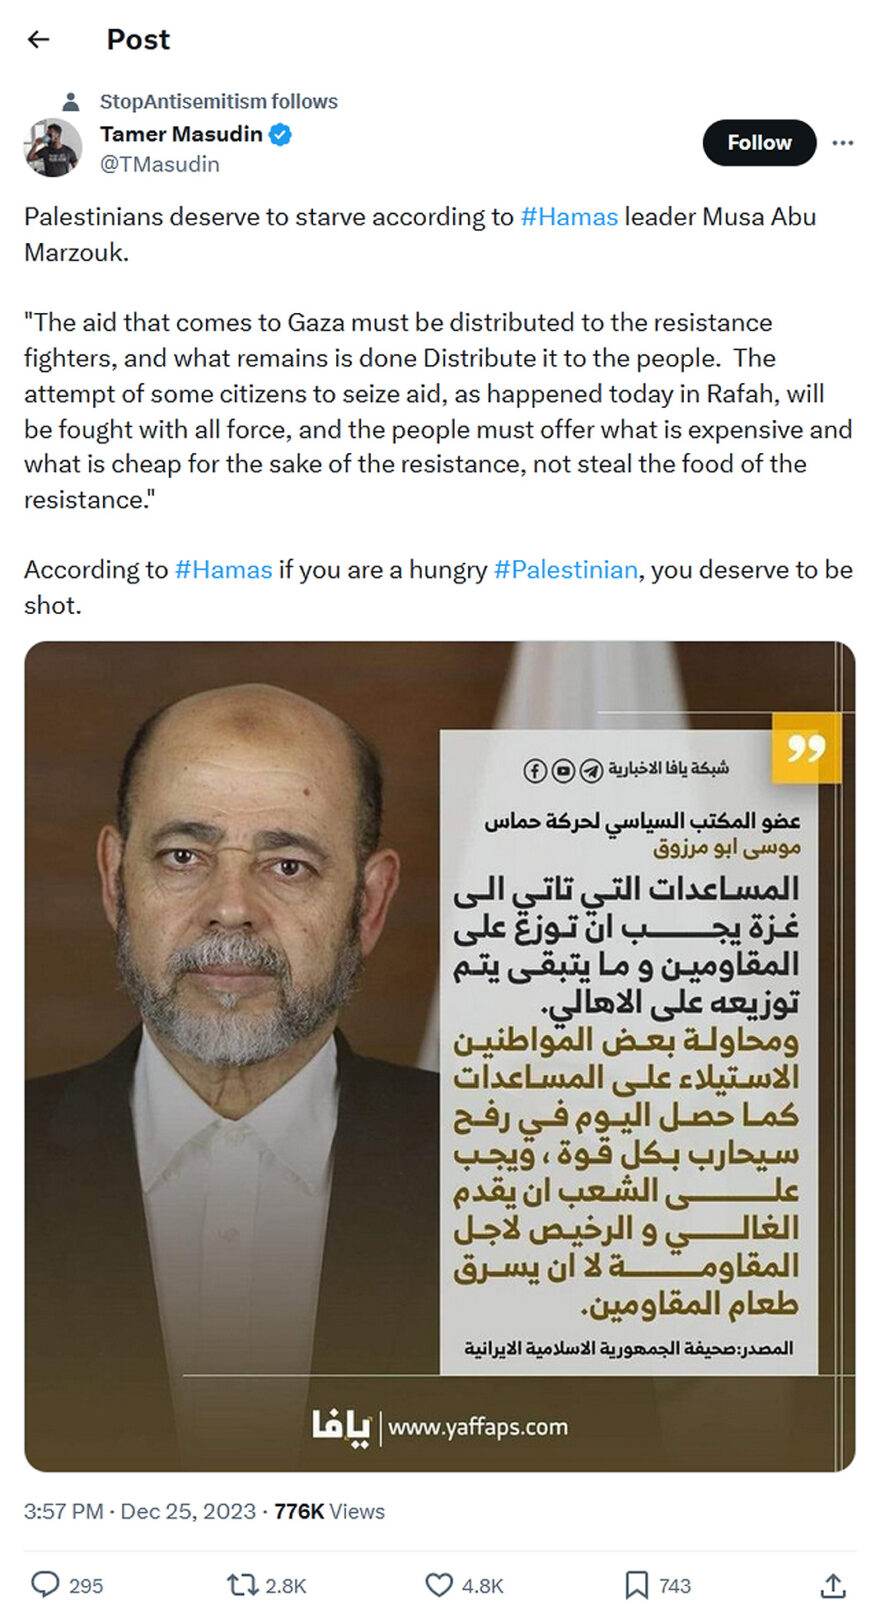 Tamer Masudin-tweet-25December2023-Palestinians deserve to starve according to Hamas